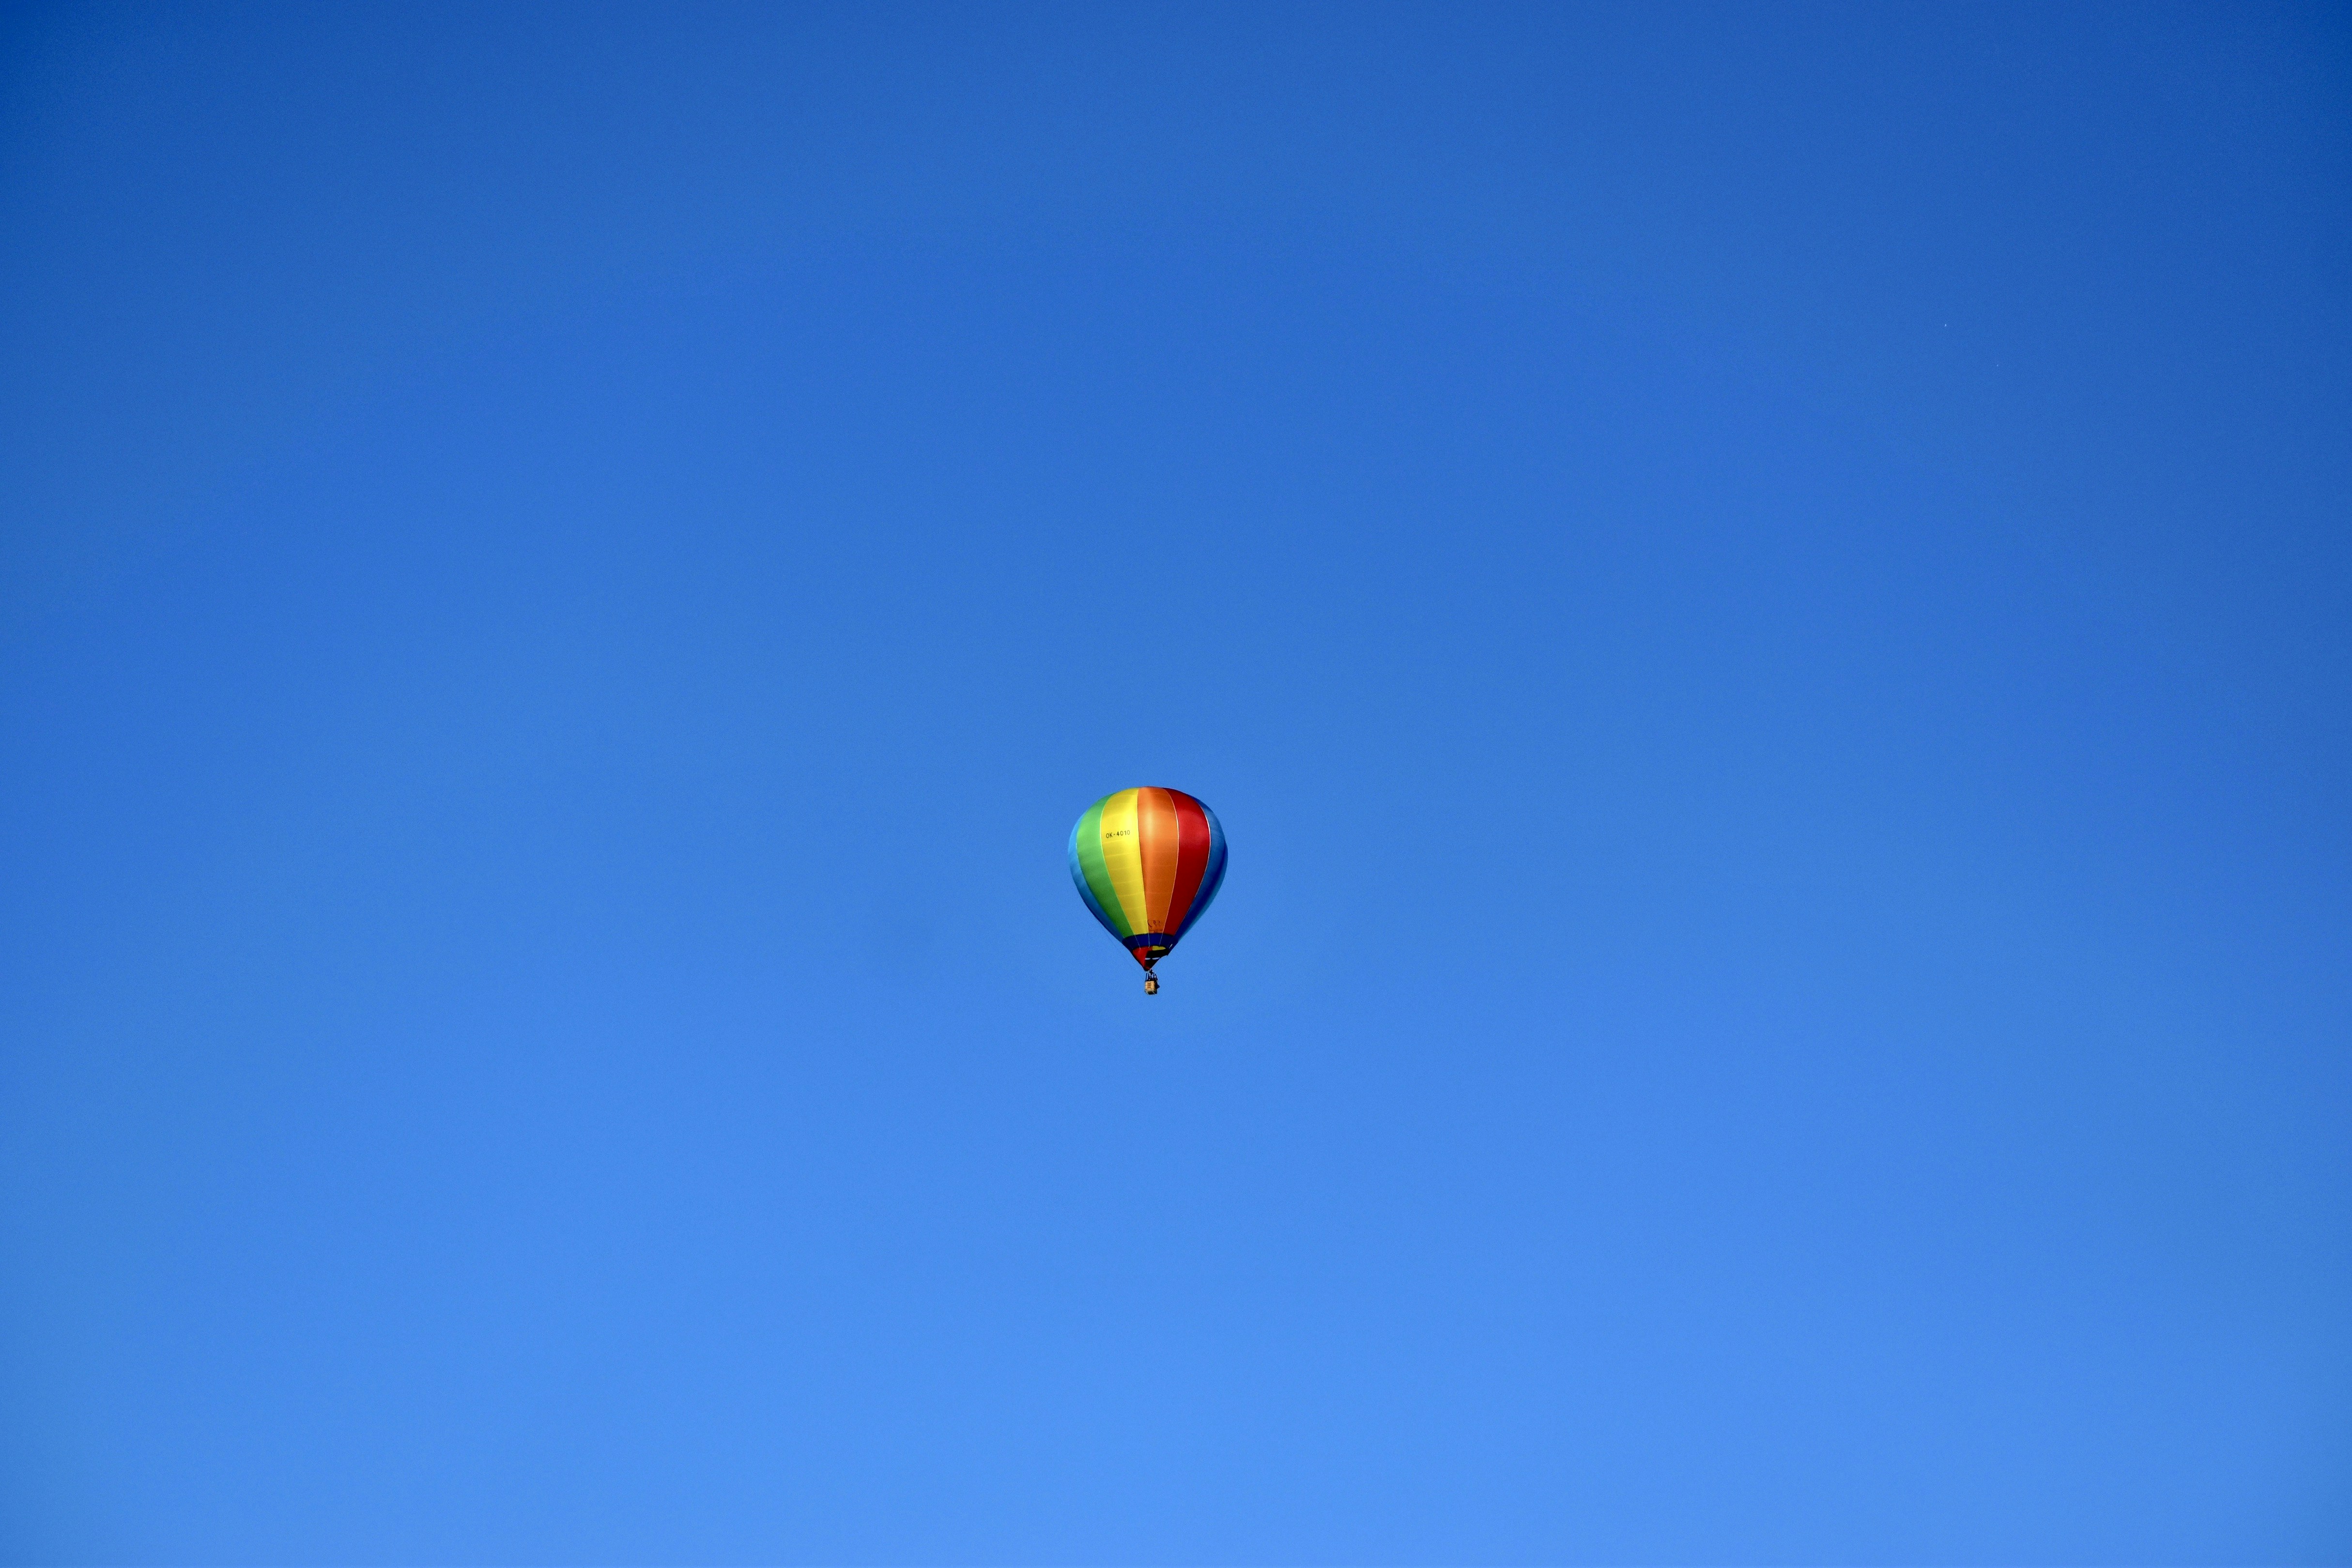 Rainbow coloured hot air balloon in a blue sky